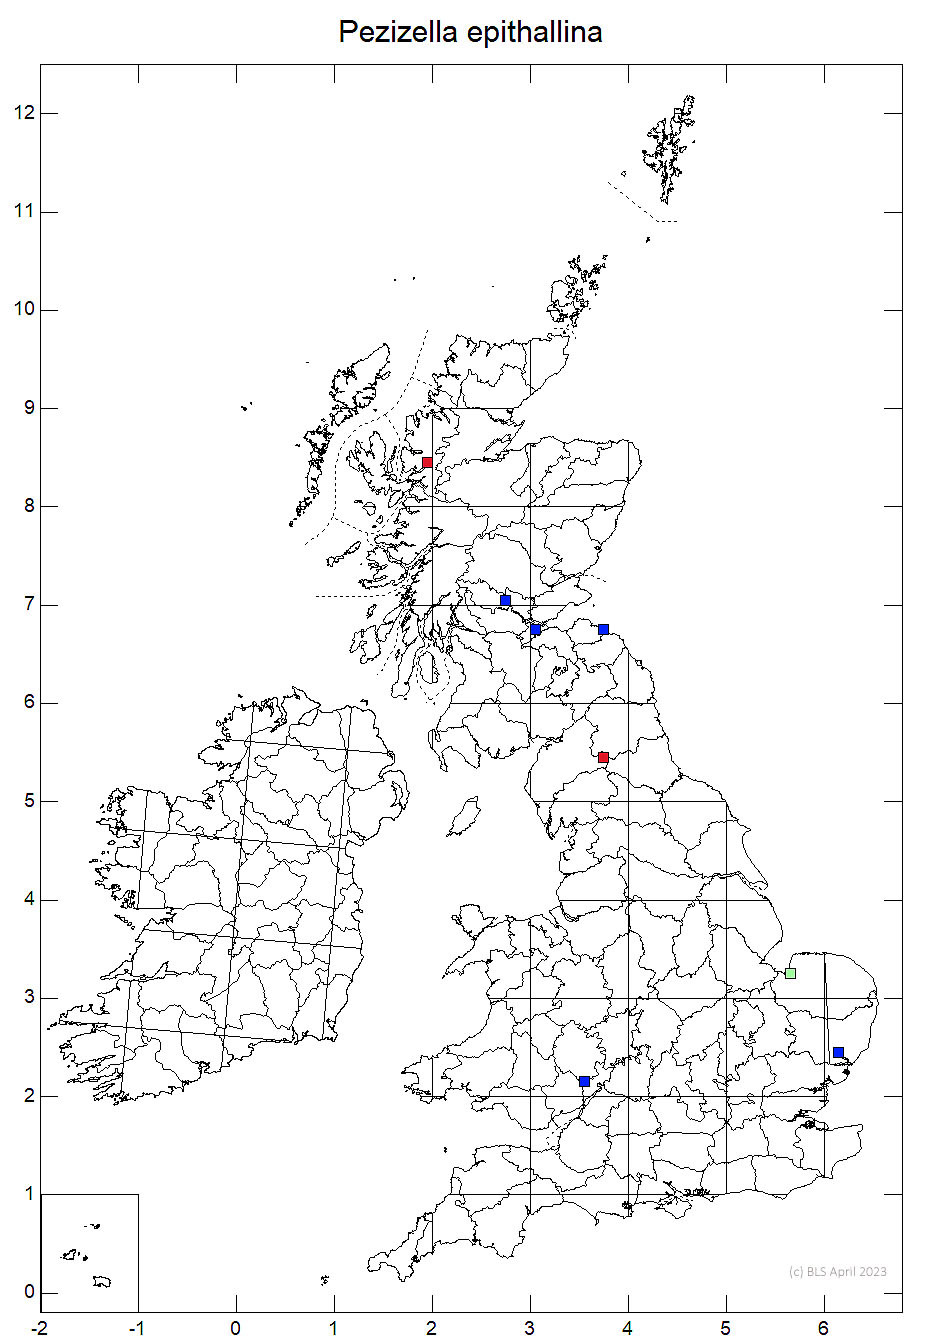 Pezizella epithallina 10km sq distribution map